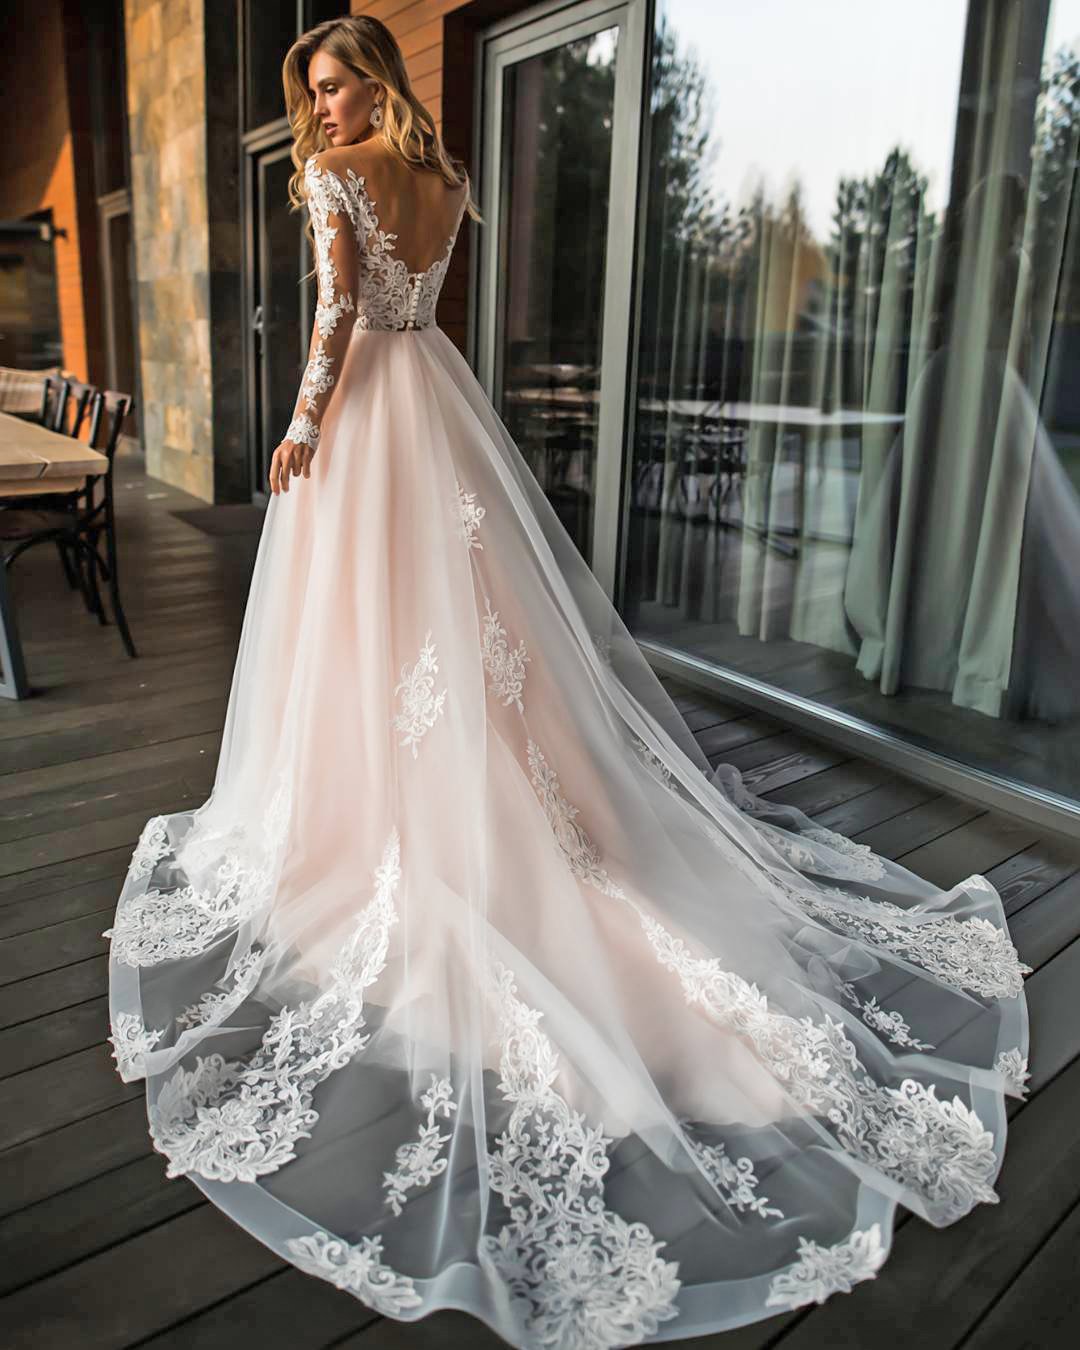 21 Most Pinned Wedding Dresses